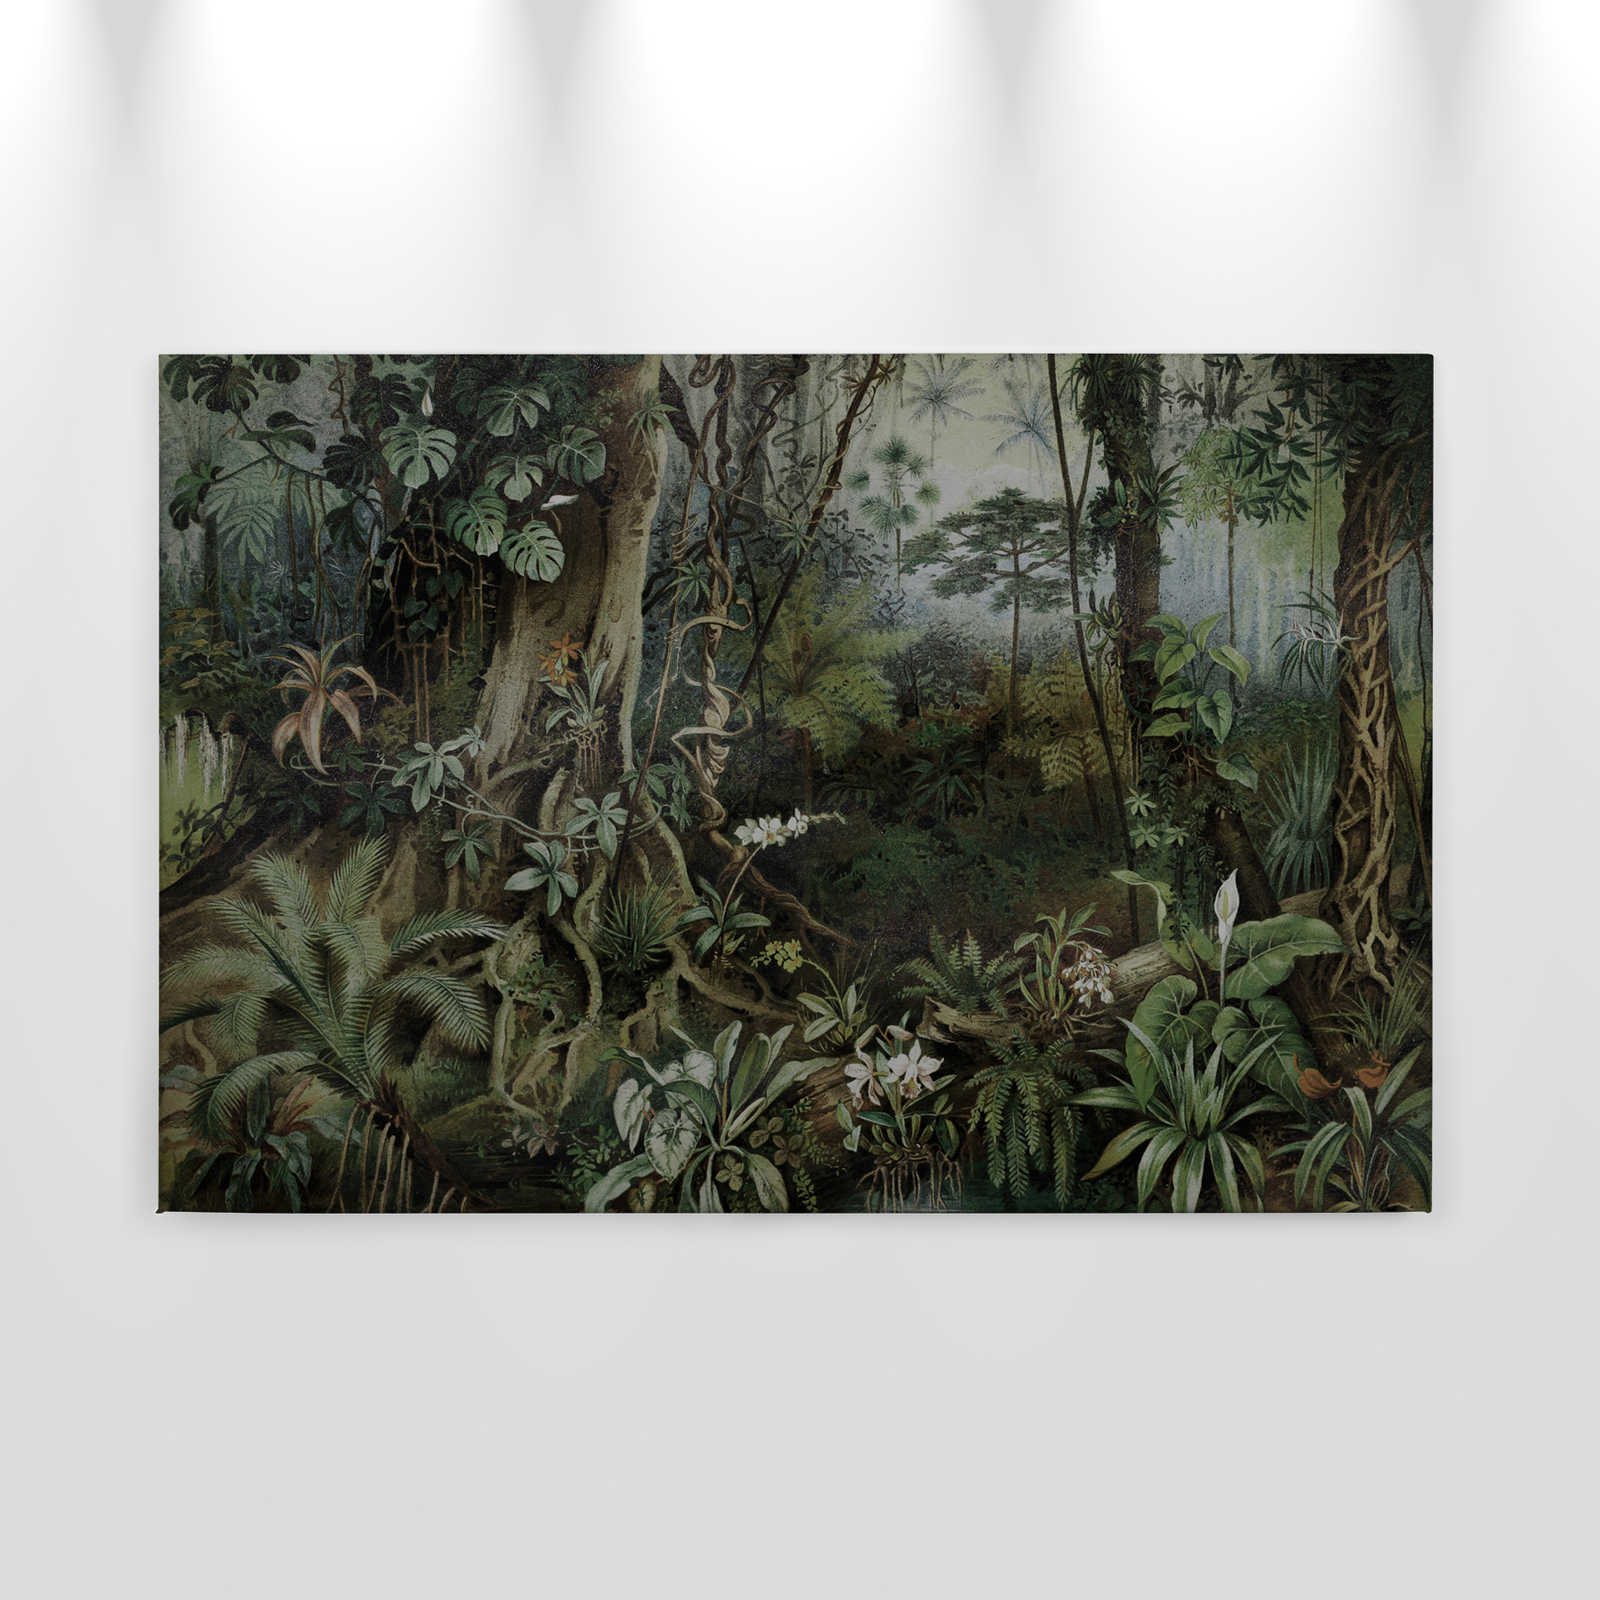             Cuadro lienzo selva en estilo dibujo | paredes by patel - 0,90 m x 0,60 m
        